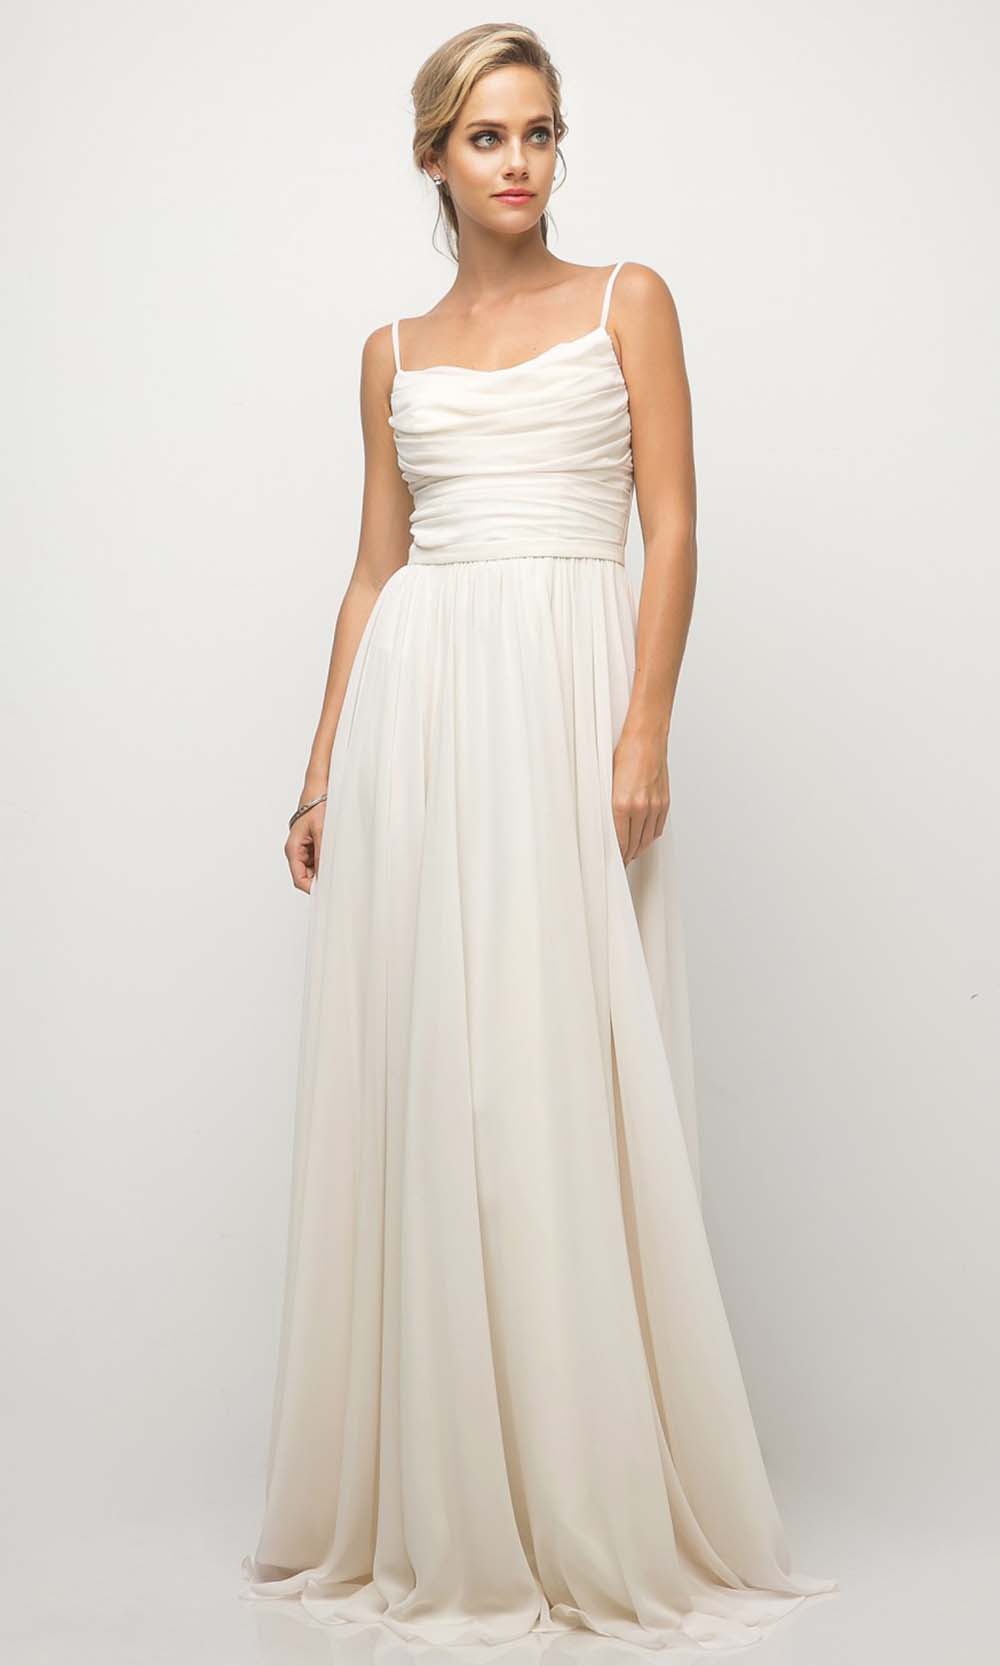 Cinderella Divine - UR136 Cowl Neck A-Line Dress In White and Neutral